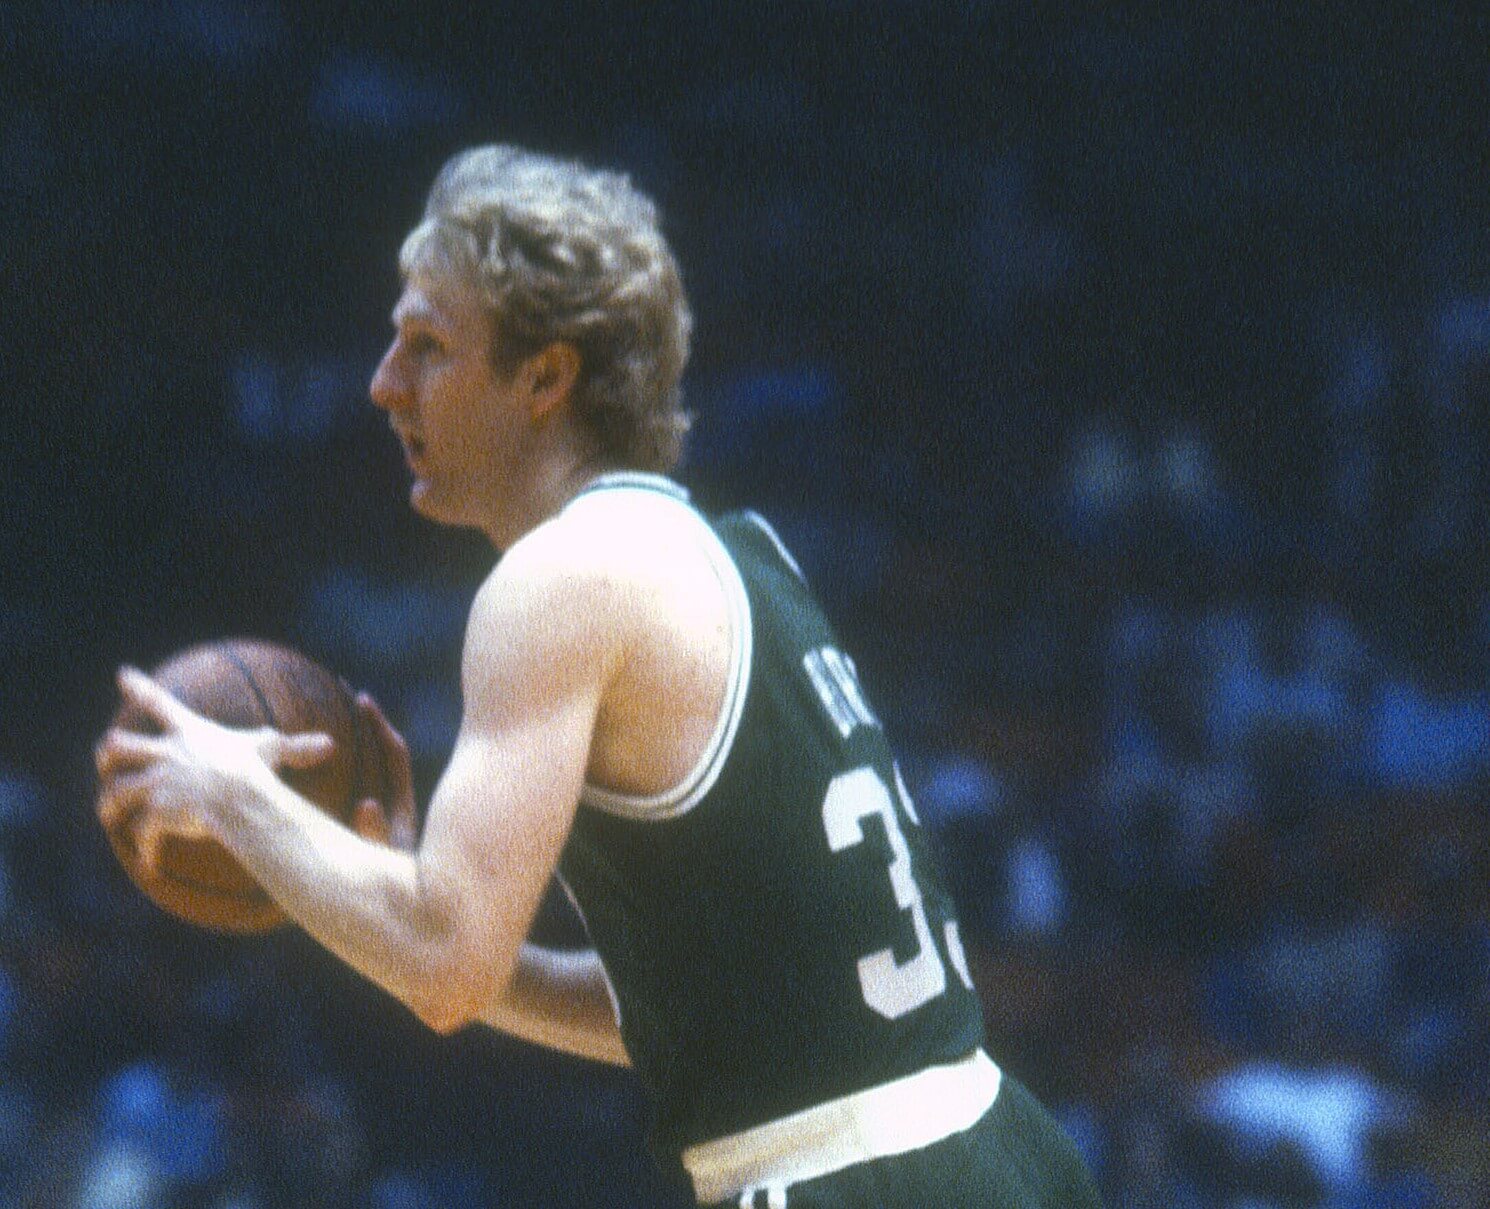 Larry Bird of the Boston Celtics looks to pass against the Houston Rockets.